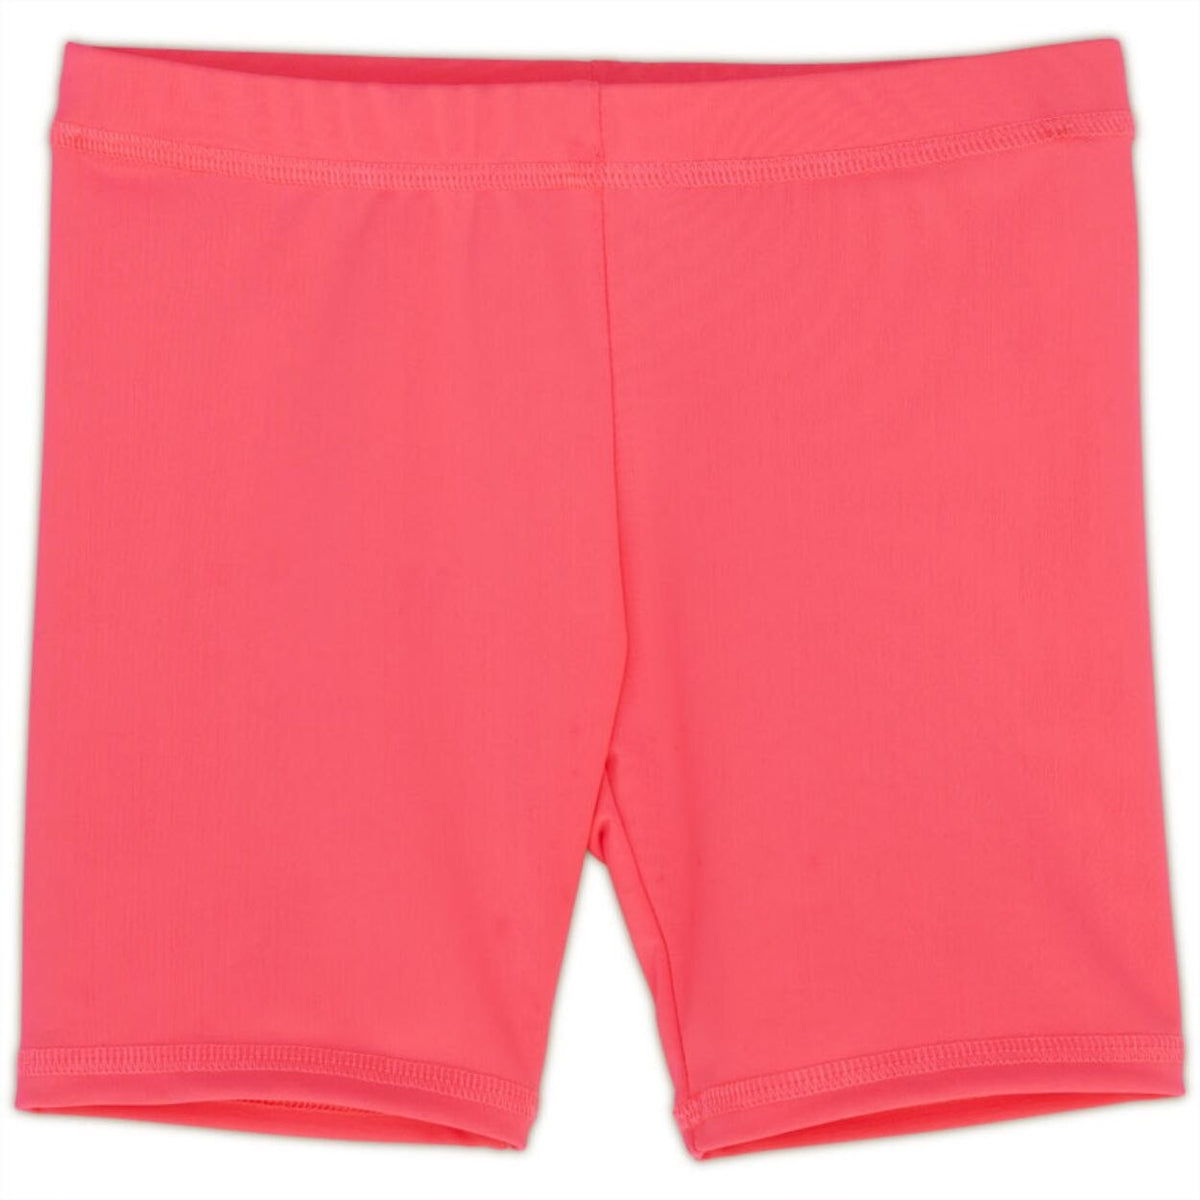 Coral Sunblocker Shorts UPF 50+ for Girls